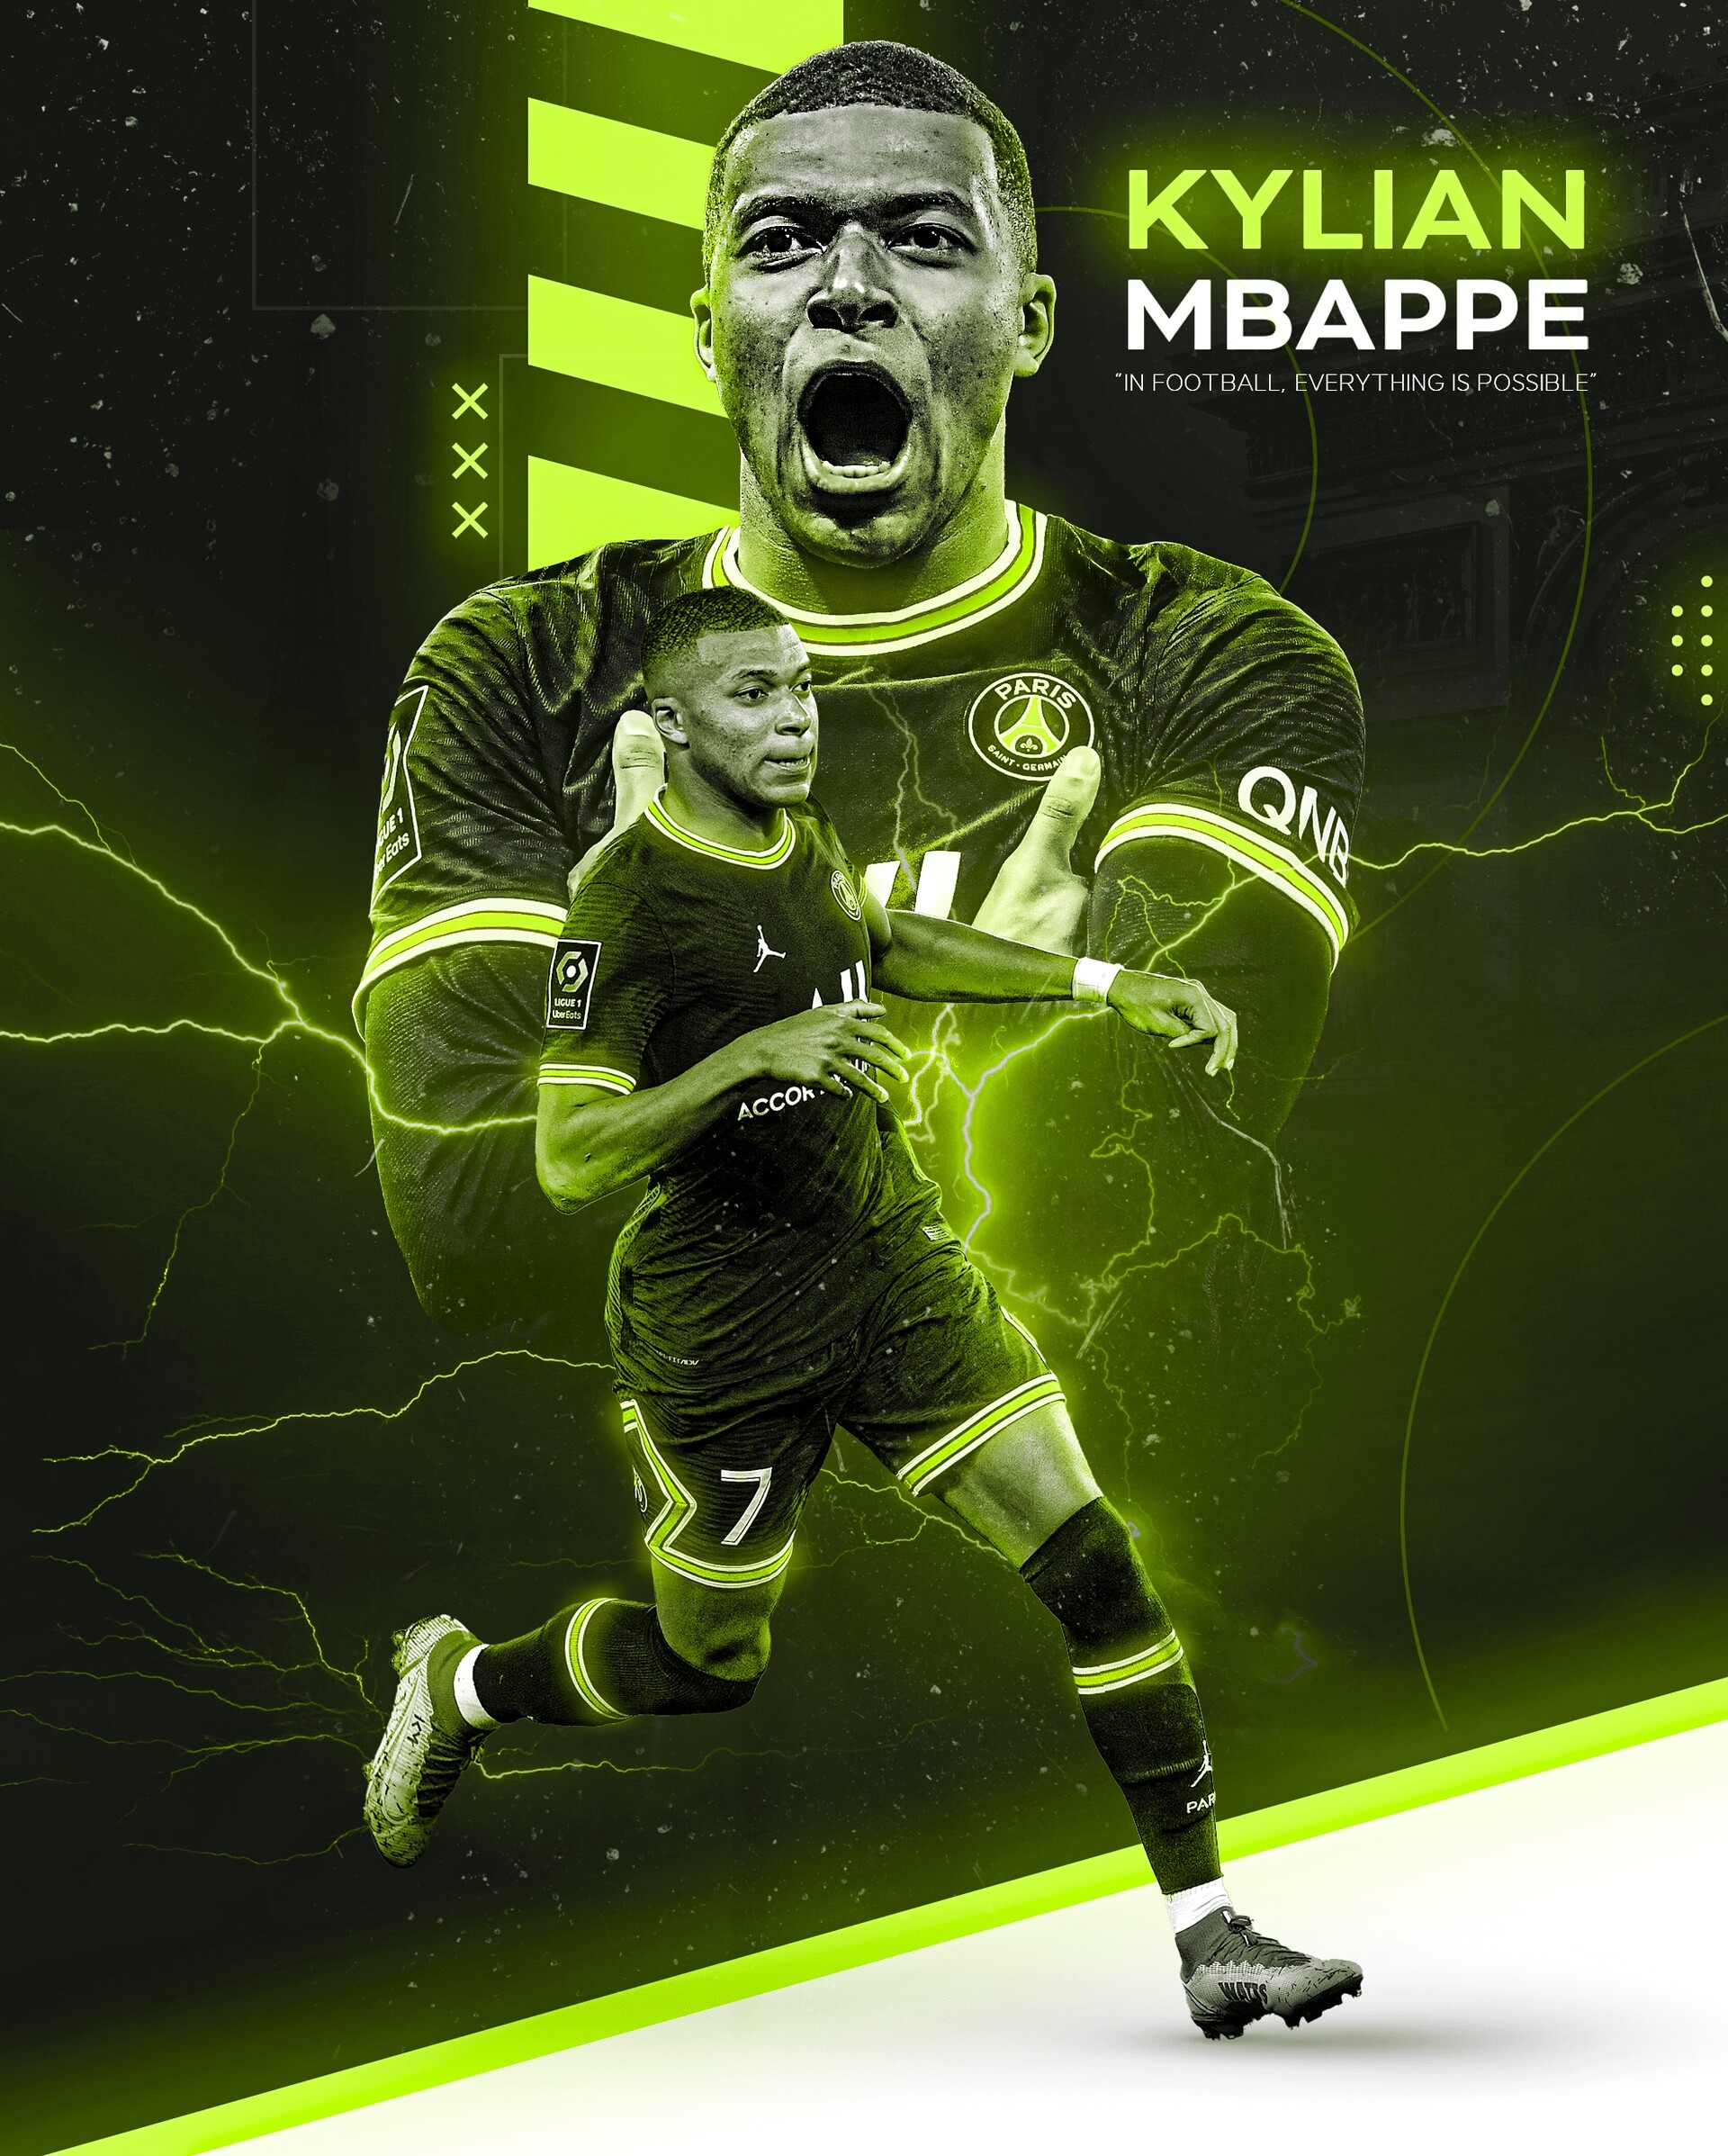 ArtStation - Kylian mbappe sports poster design